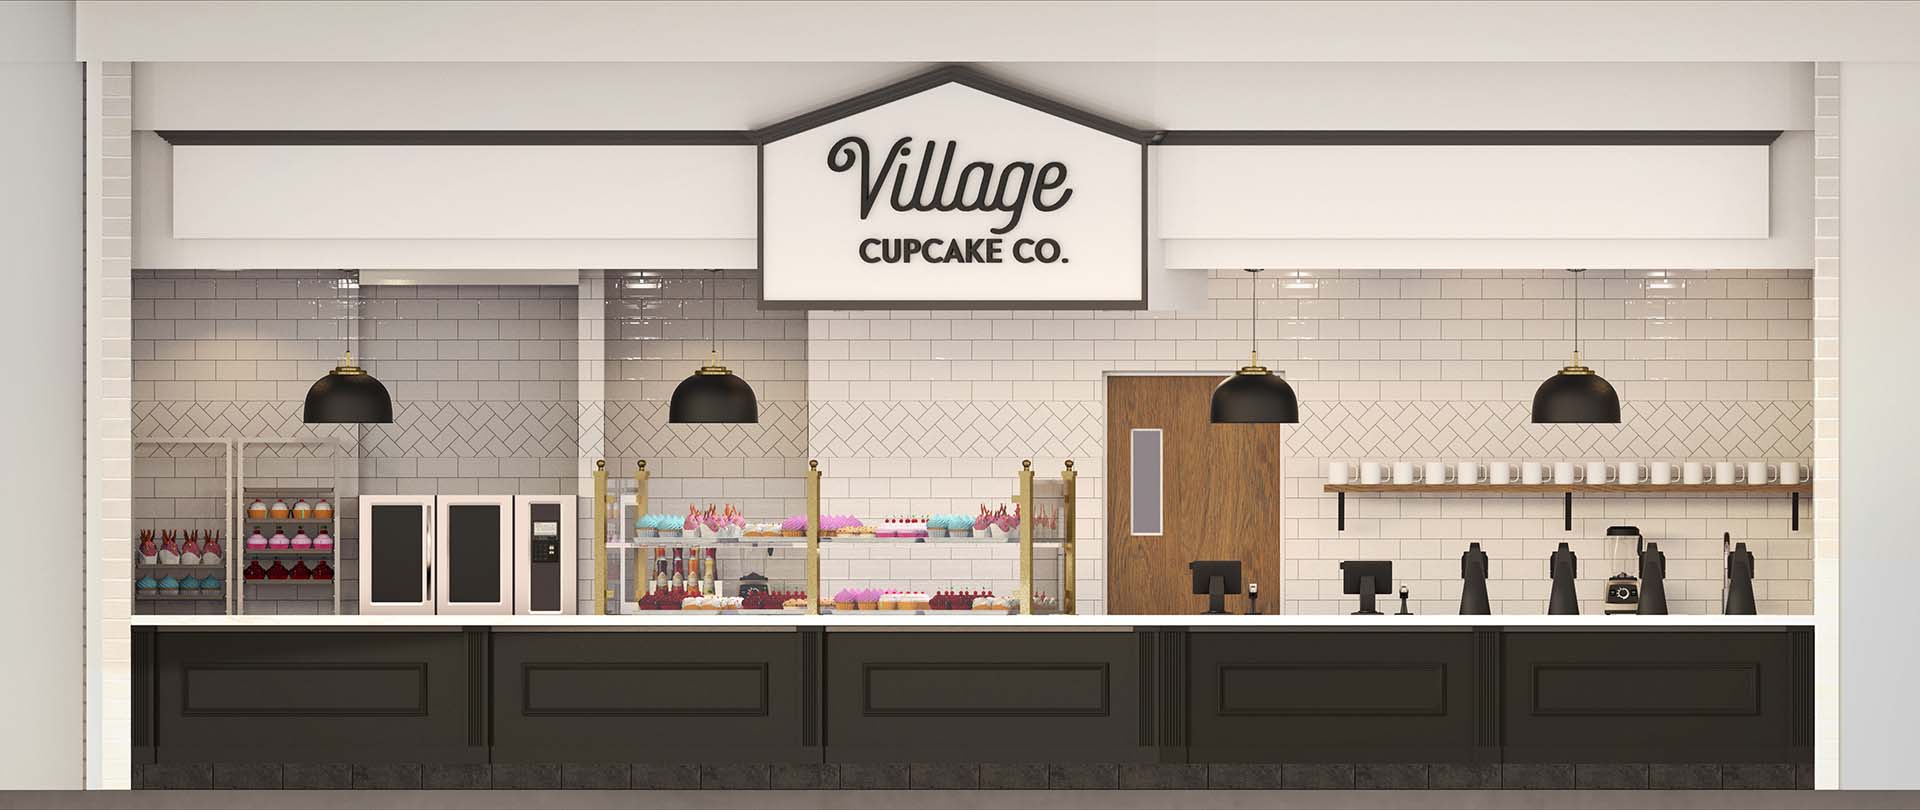 Village Cupcake Company - Elevations - Elevations 4499-VillageCupcakeCompany-dv2-02b-1920.jpg